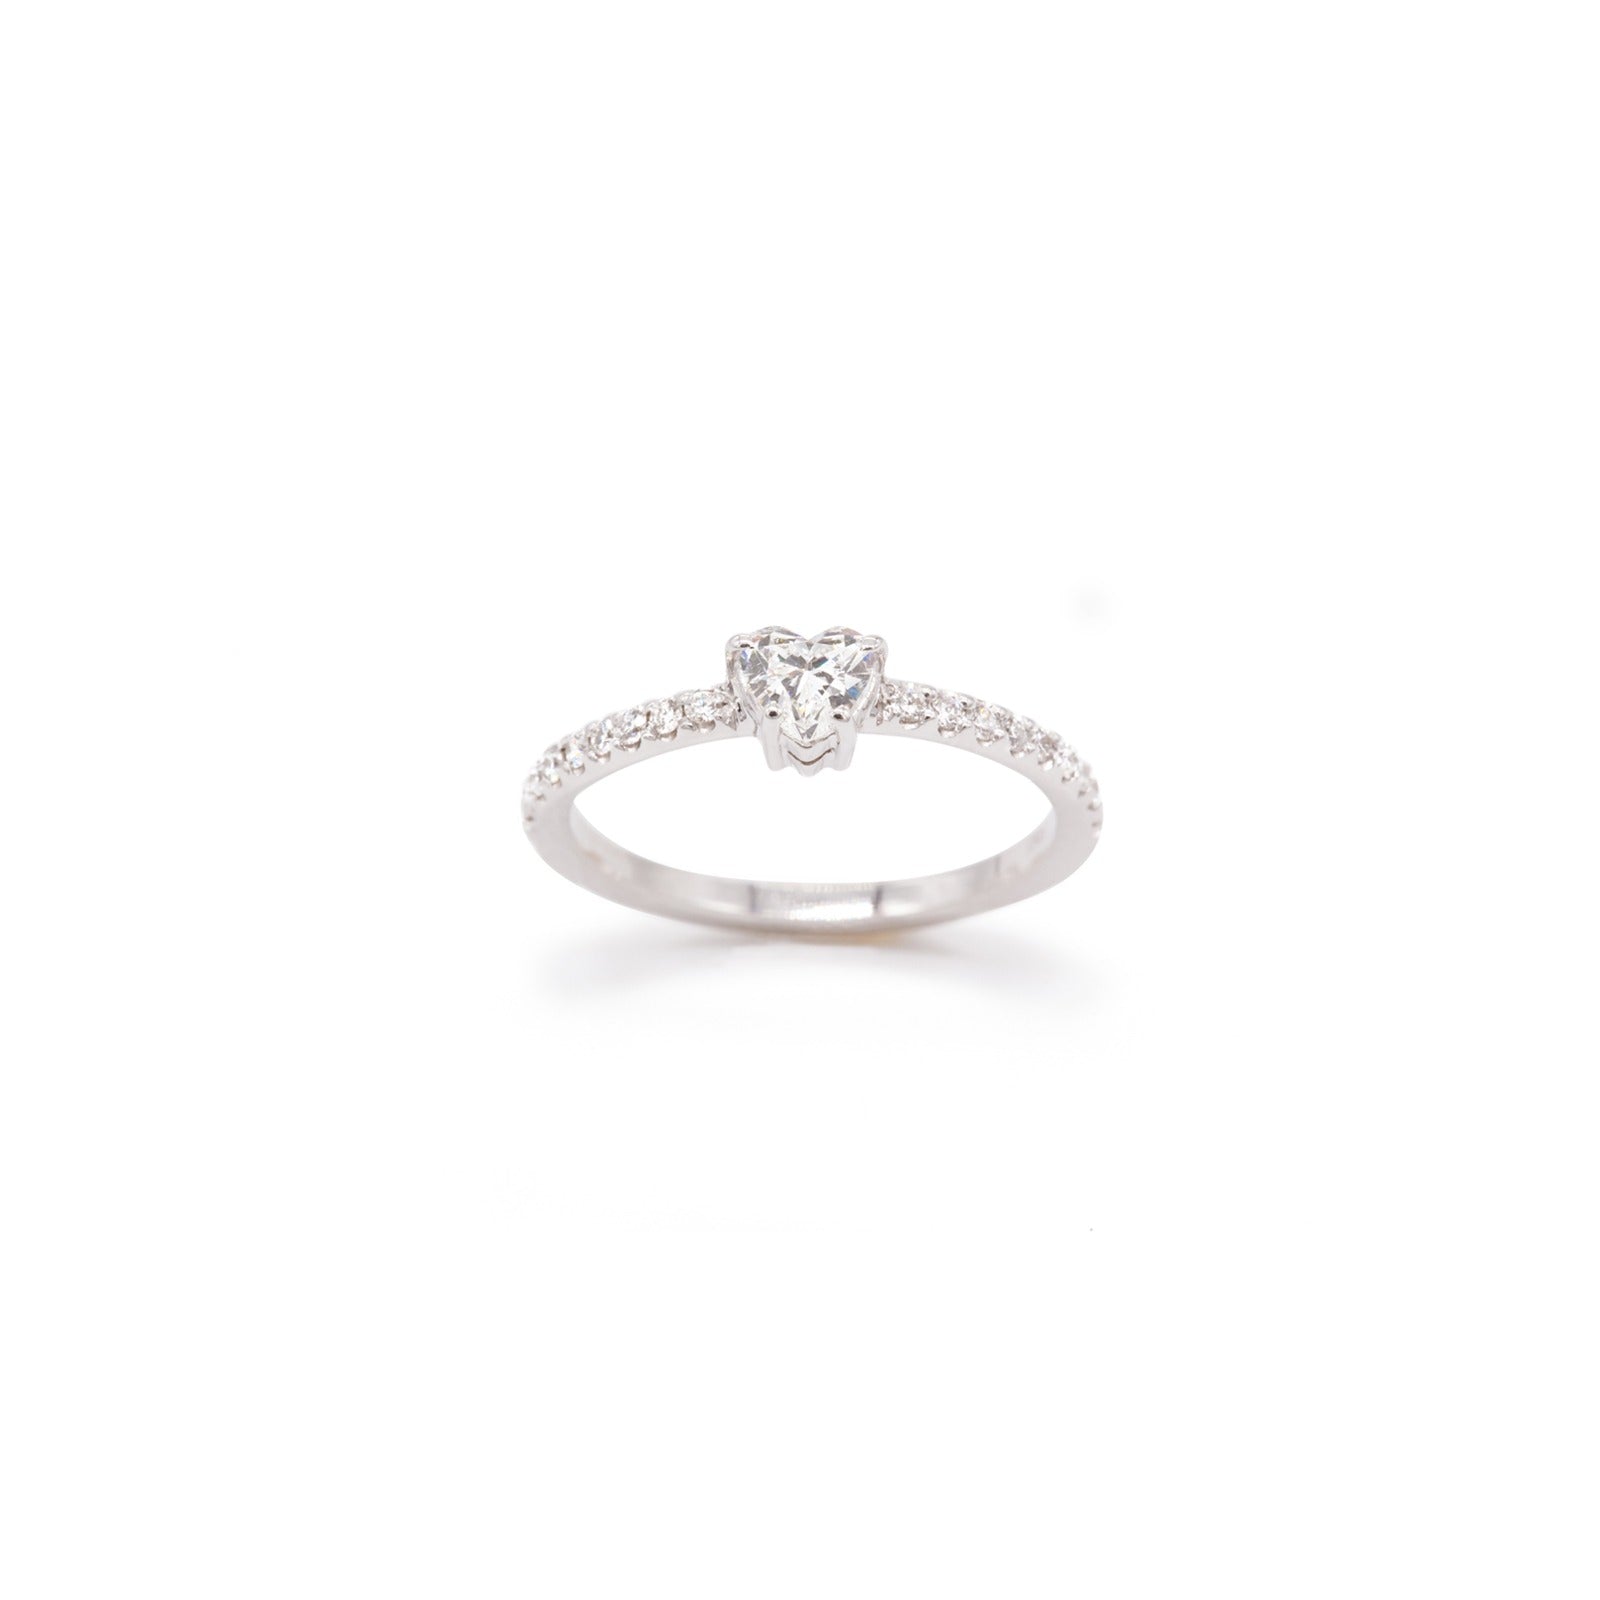 White gold heart cut diamond ring